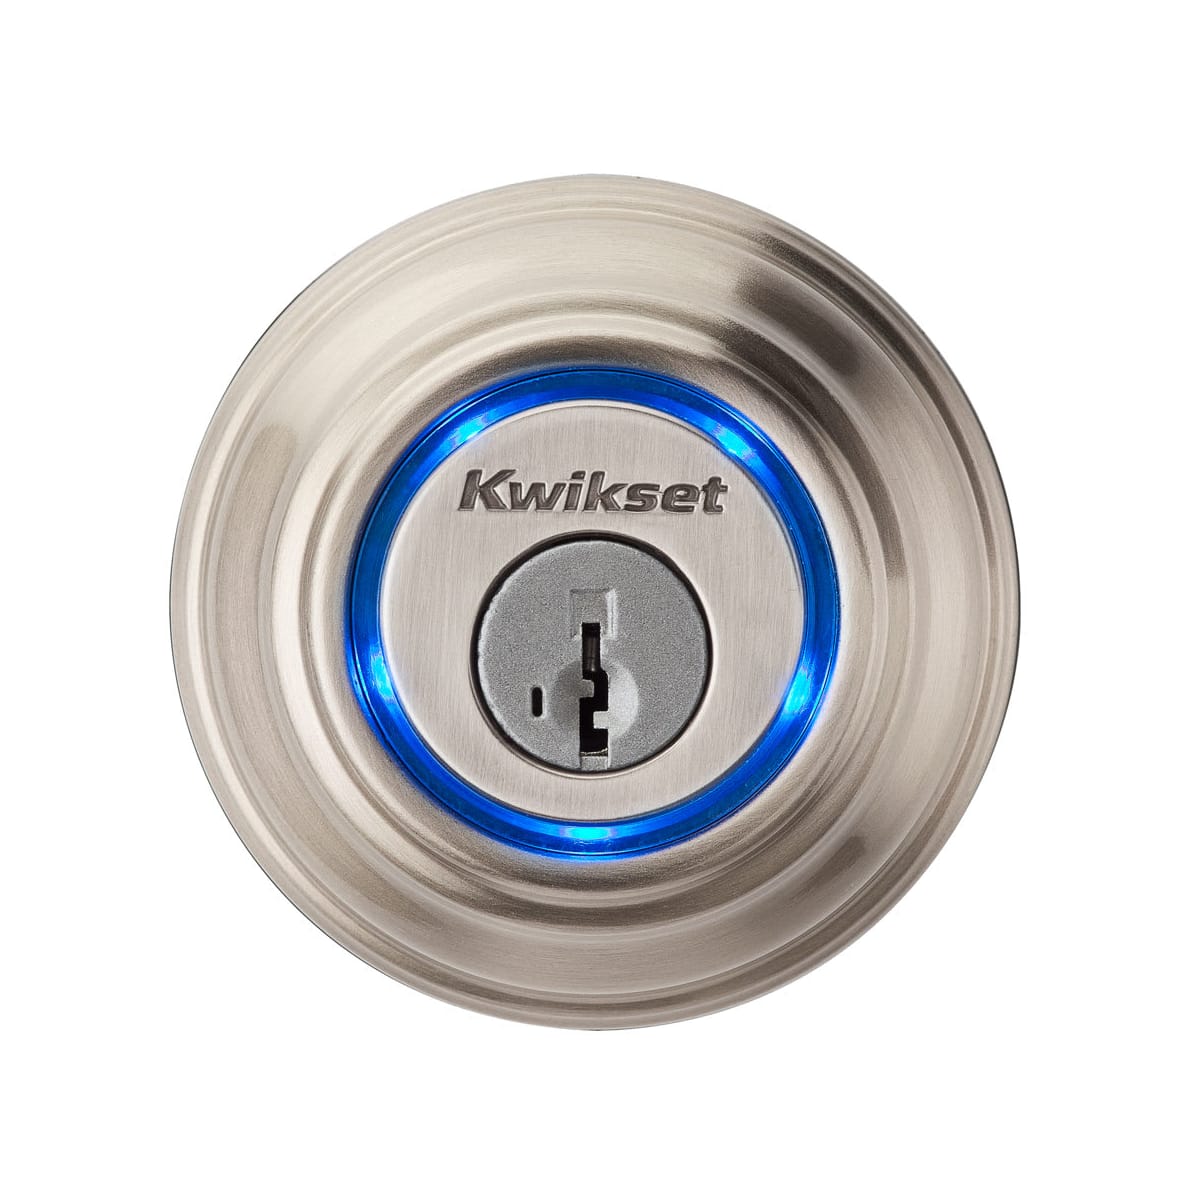 Kwikset Kevo Extra Door FOB 926 Unlocks door without taking keys out Compact 